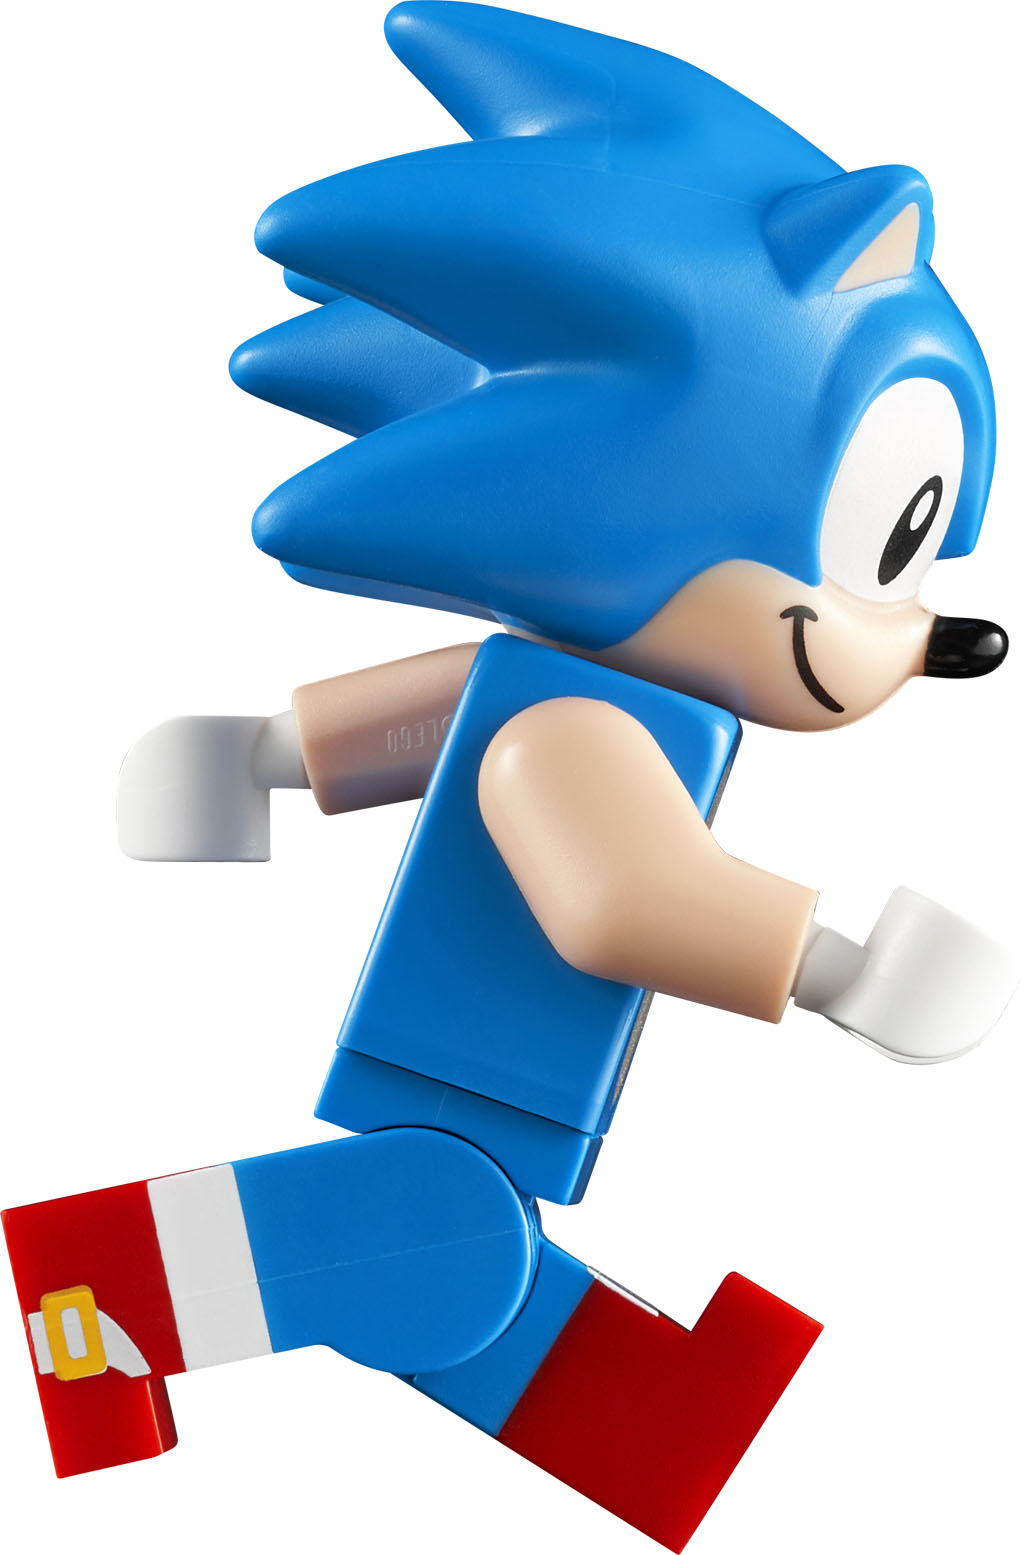 Sonic the Hedgehog Green Hill Zone (21331) – Brickhub